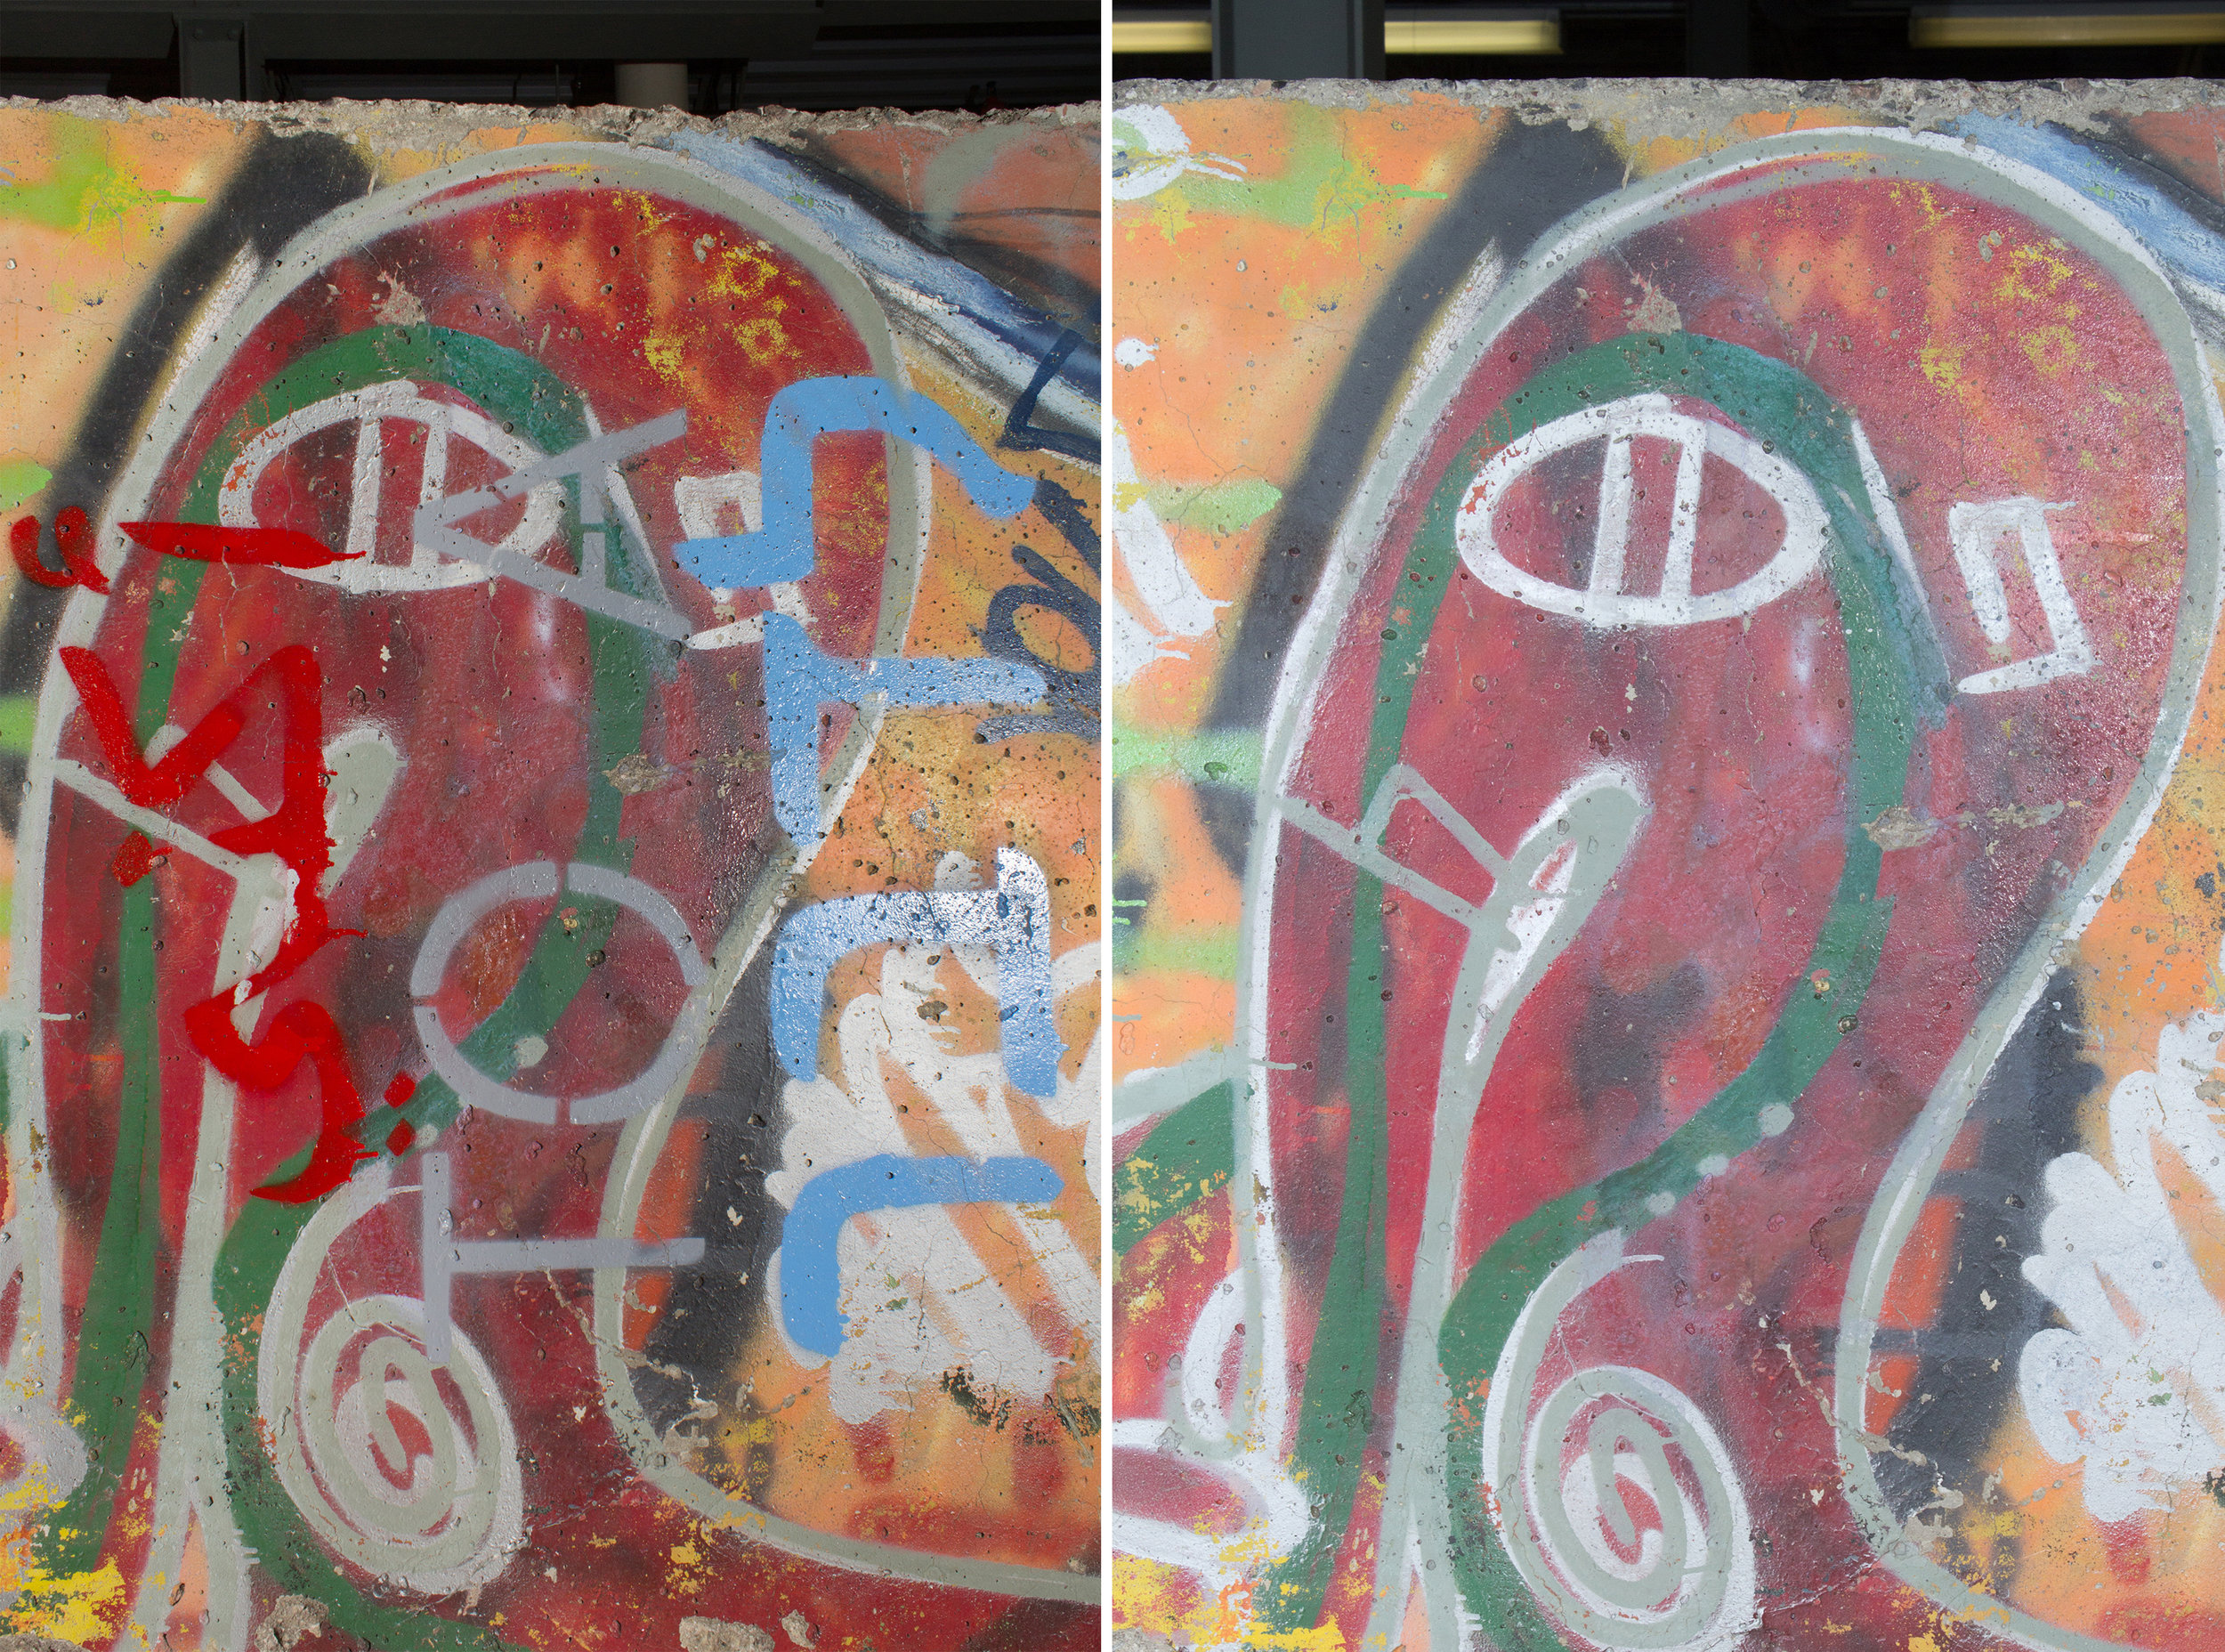  Detail of graffiti removal: Before (left) and After (right).&nbsp;    
  
 
  
    
  
 Normal 
 0 
 
 
 
 
 false 
 false 
 false 
 
 EN-US 
 JA 
 X-NONE 
 
  
  
  
  
  
  
  
  
  
  
 
 
  
  
  
  
  
  
  
  
  
  
  
  
    
  
 
 
 
 
 
 
 